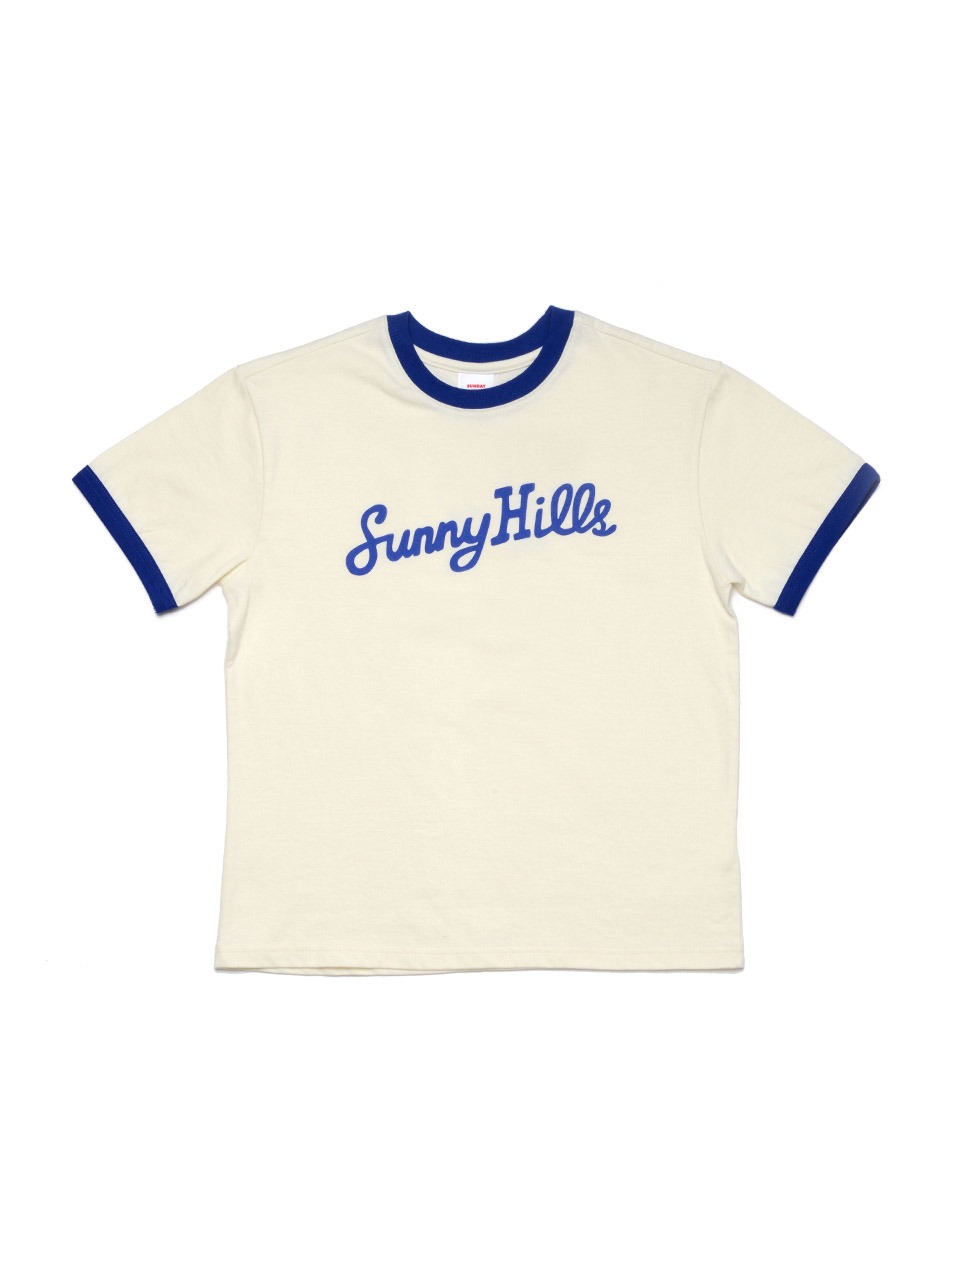 SUNNY HILLS TEE [Cream]